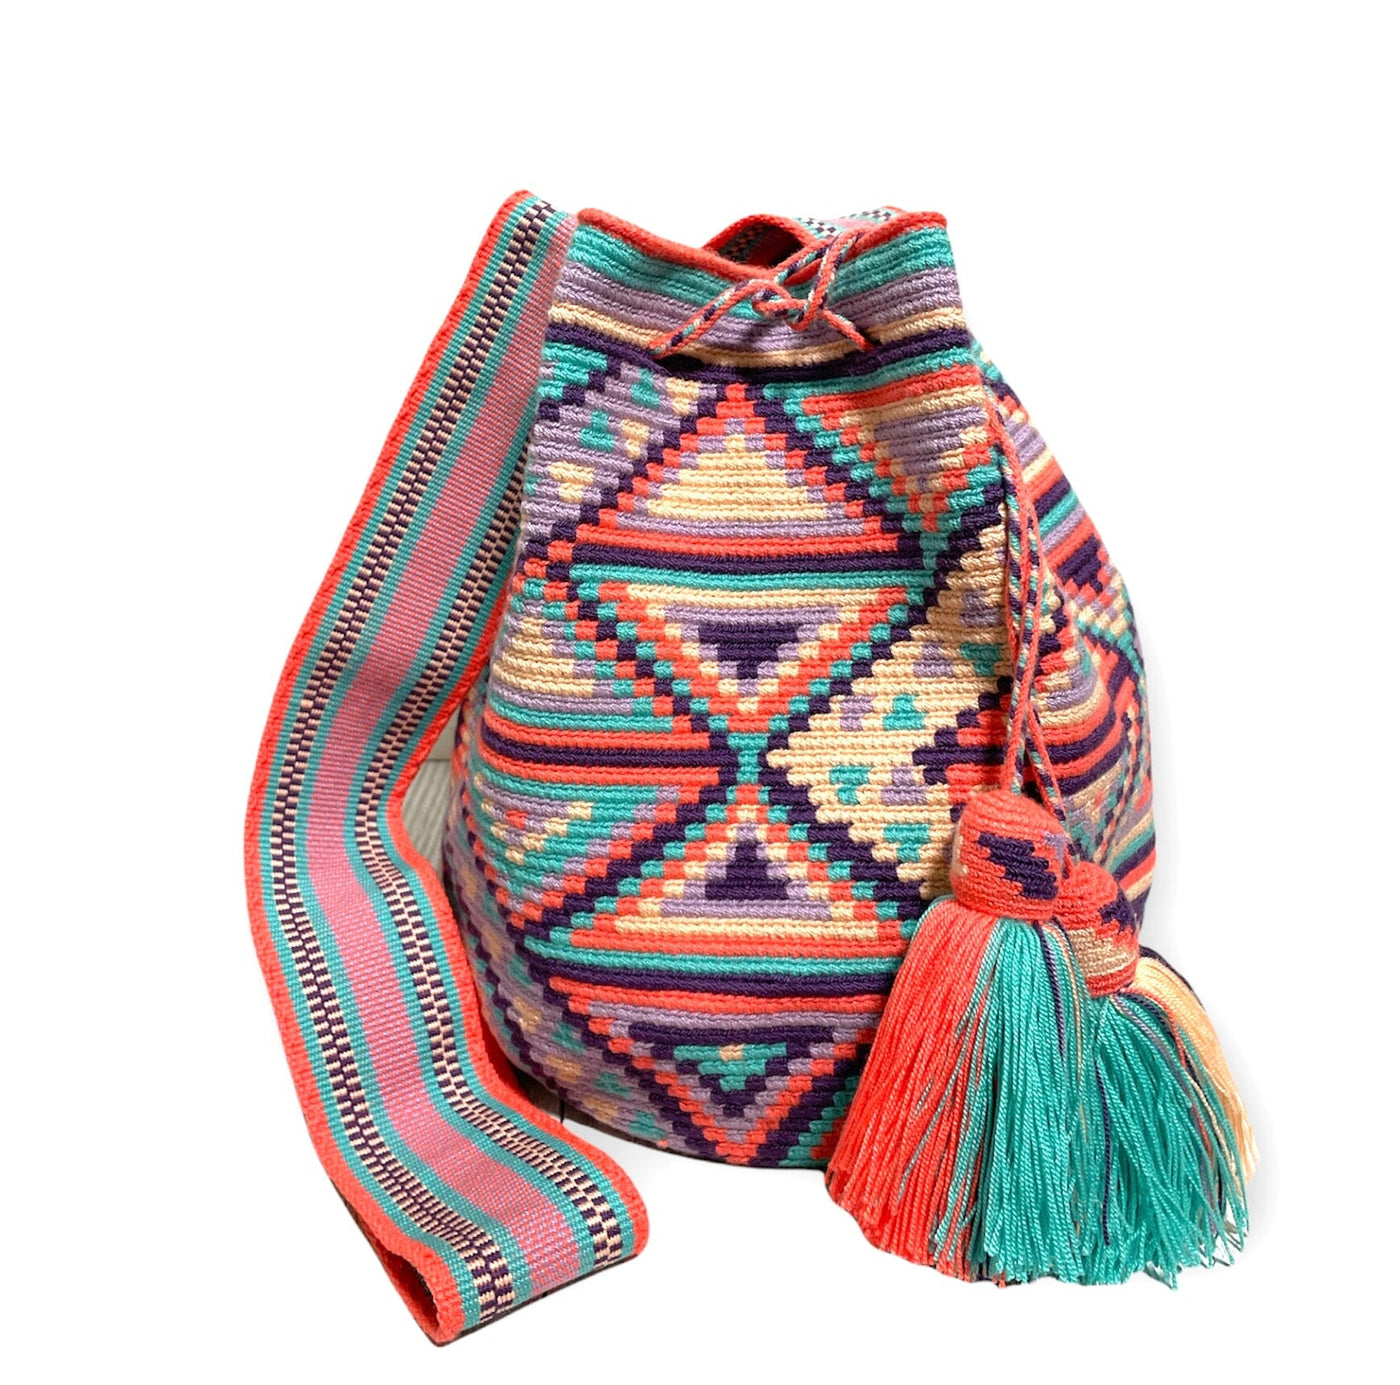 Lavender Turquoise Coral Crochet Bag | Spring Colors Crossbody Bag | Bohemian Handbag | Colorful 4U